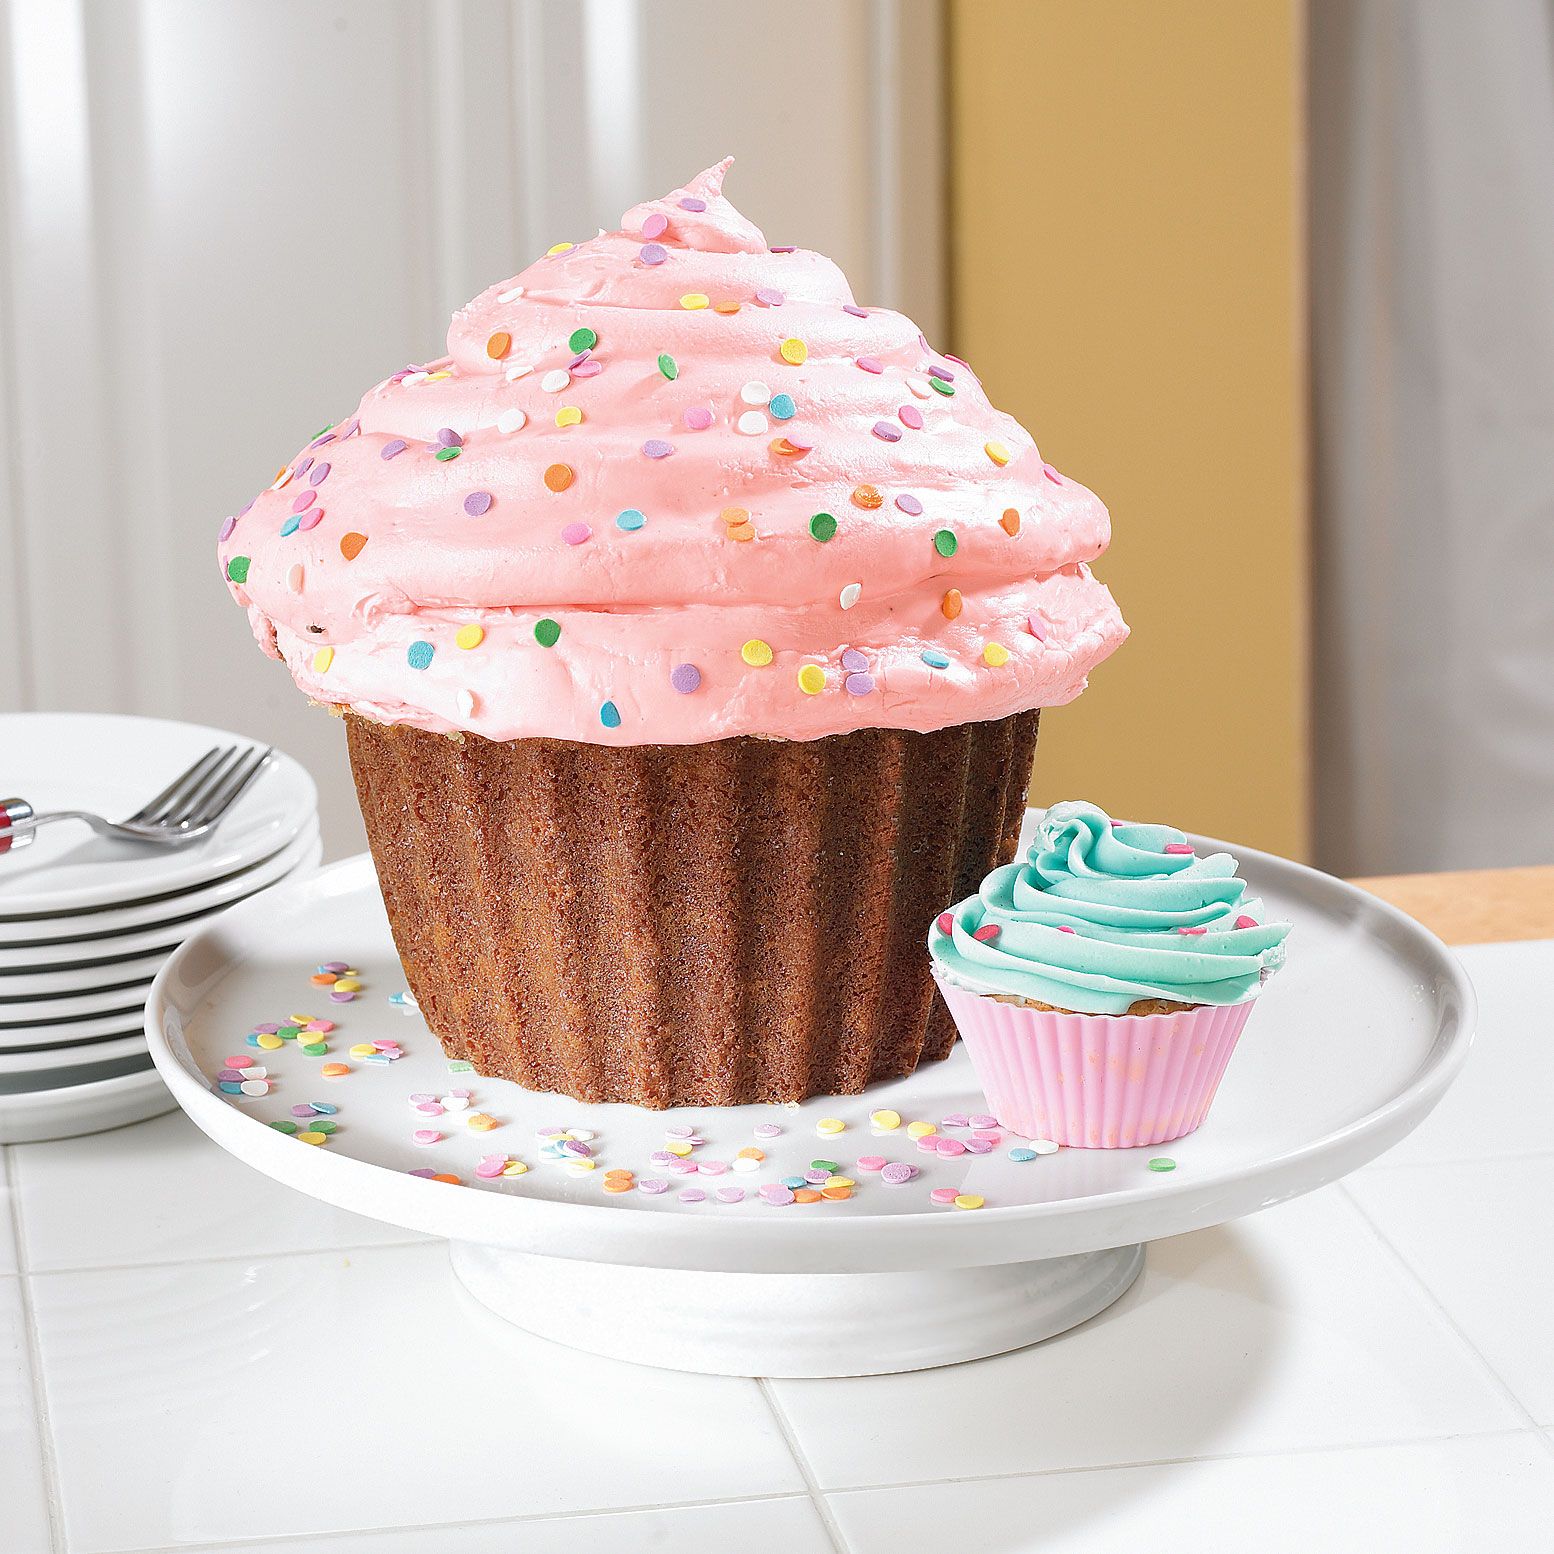 easy cupcake designs | Cupcakes!